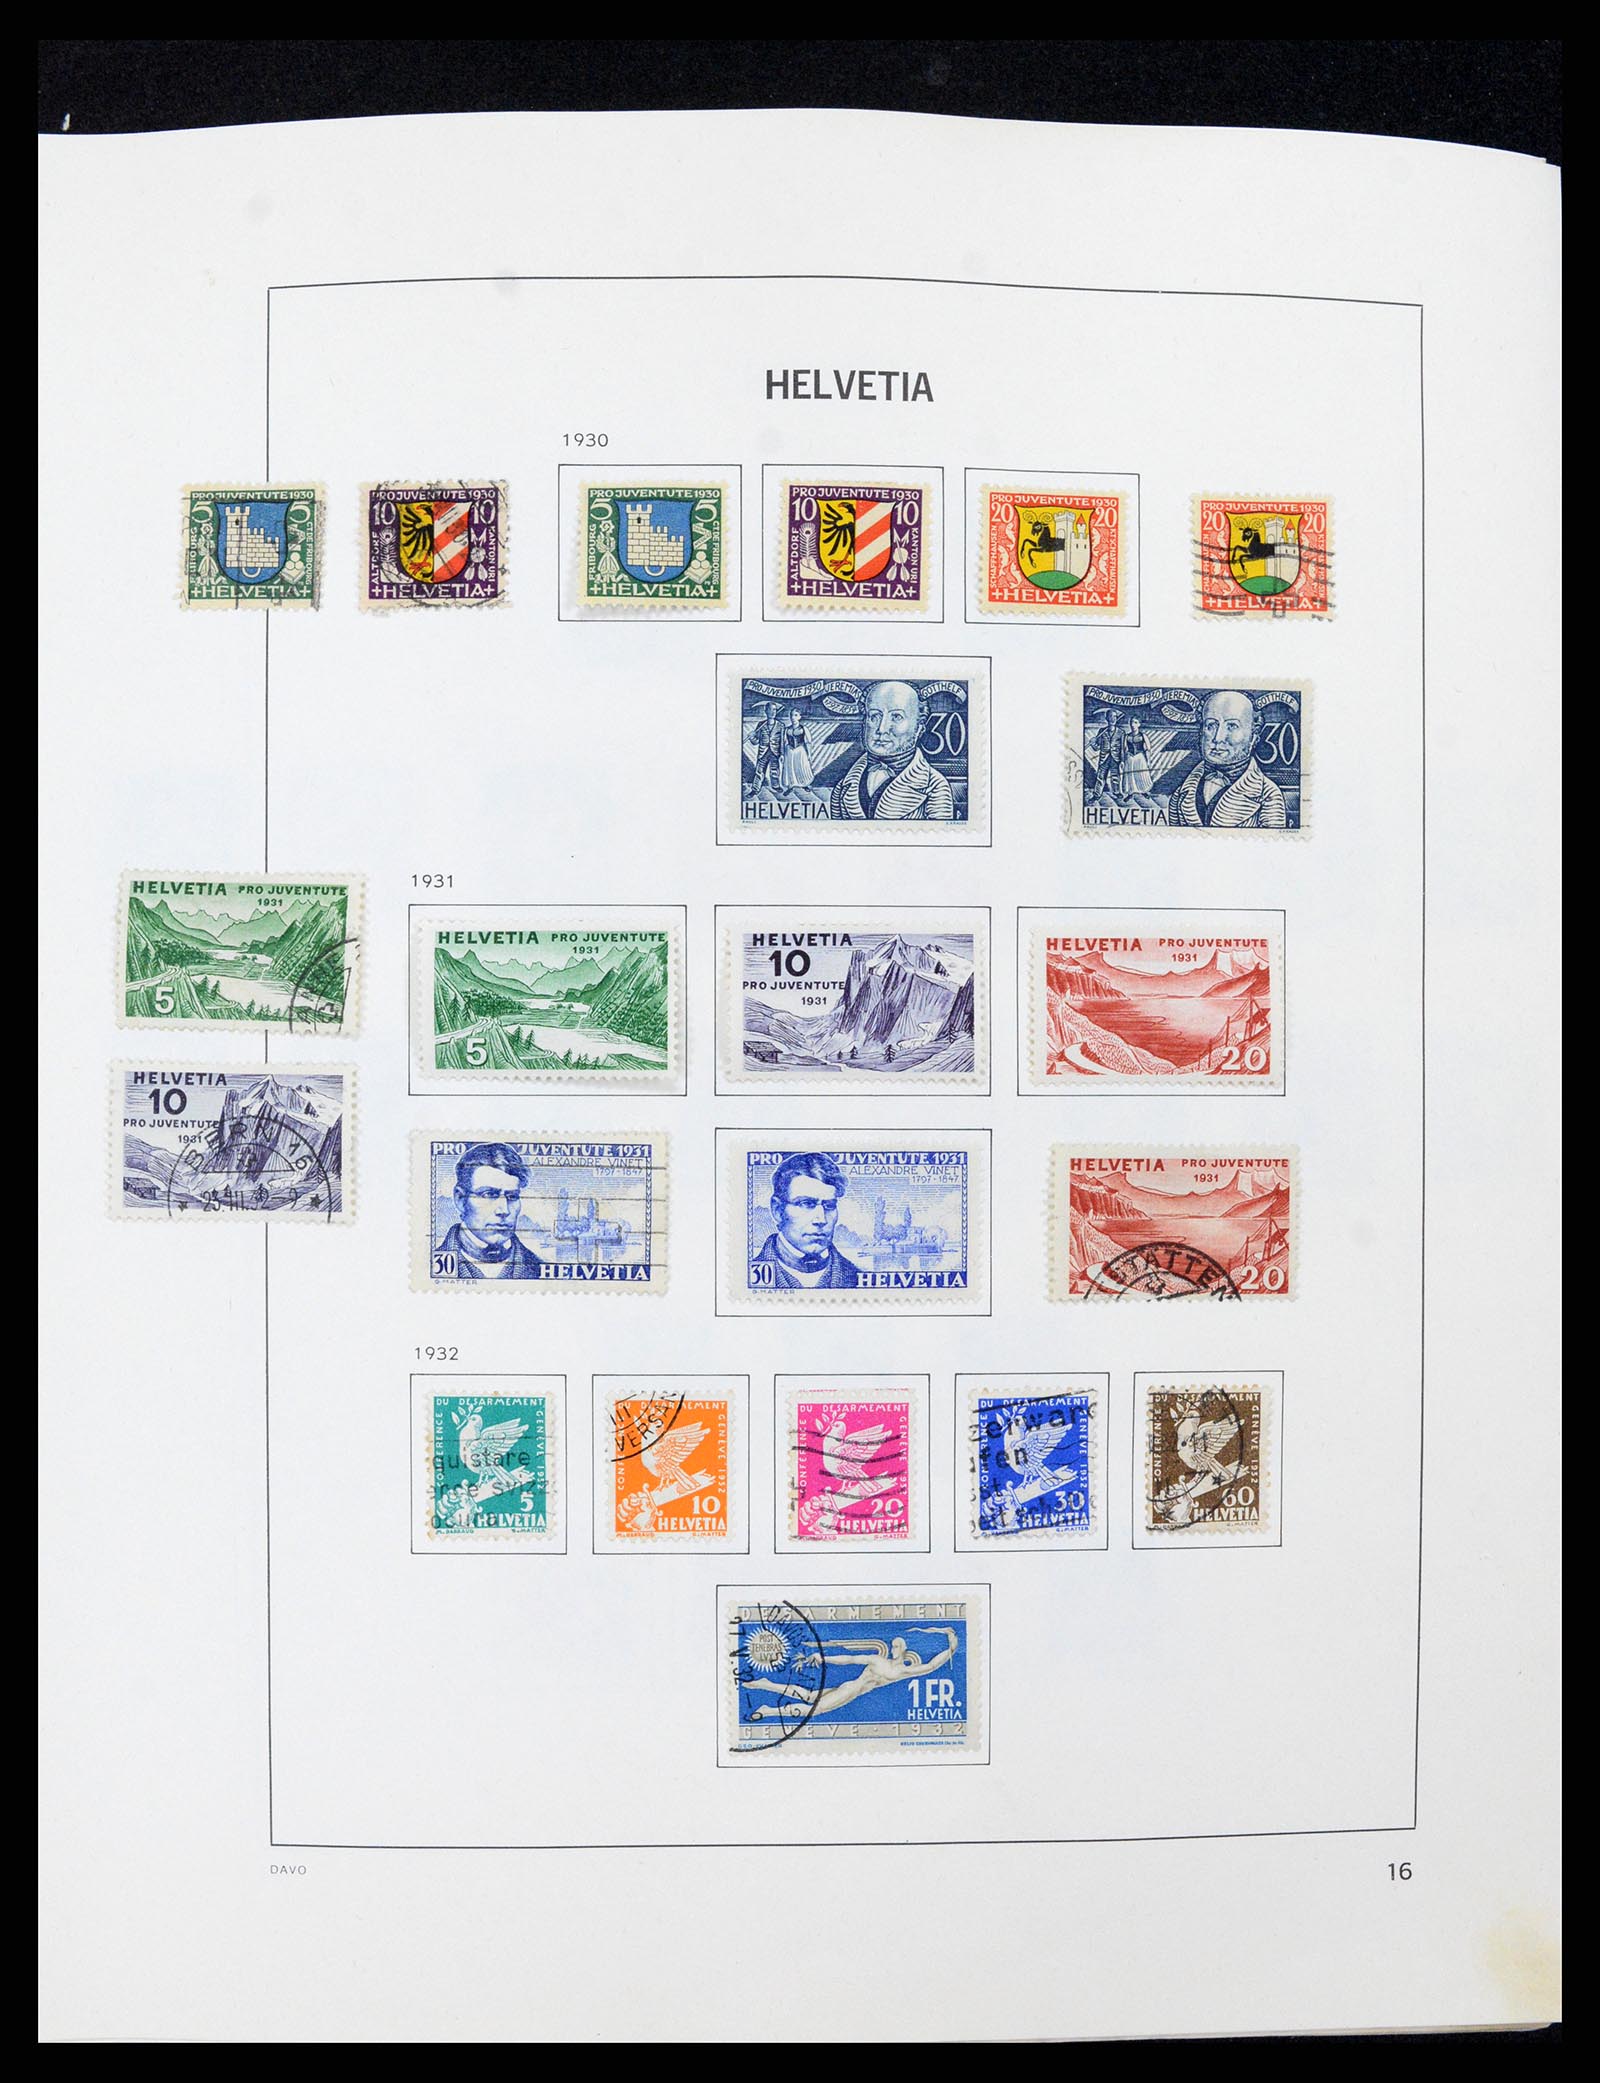 37496 015 - Stamp collection 37496 Switzerland 1854-2002.